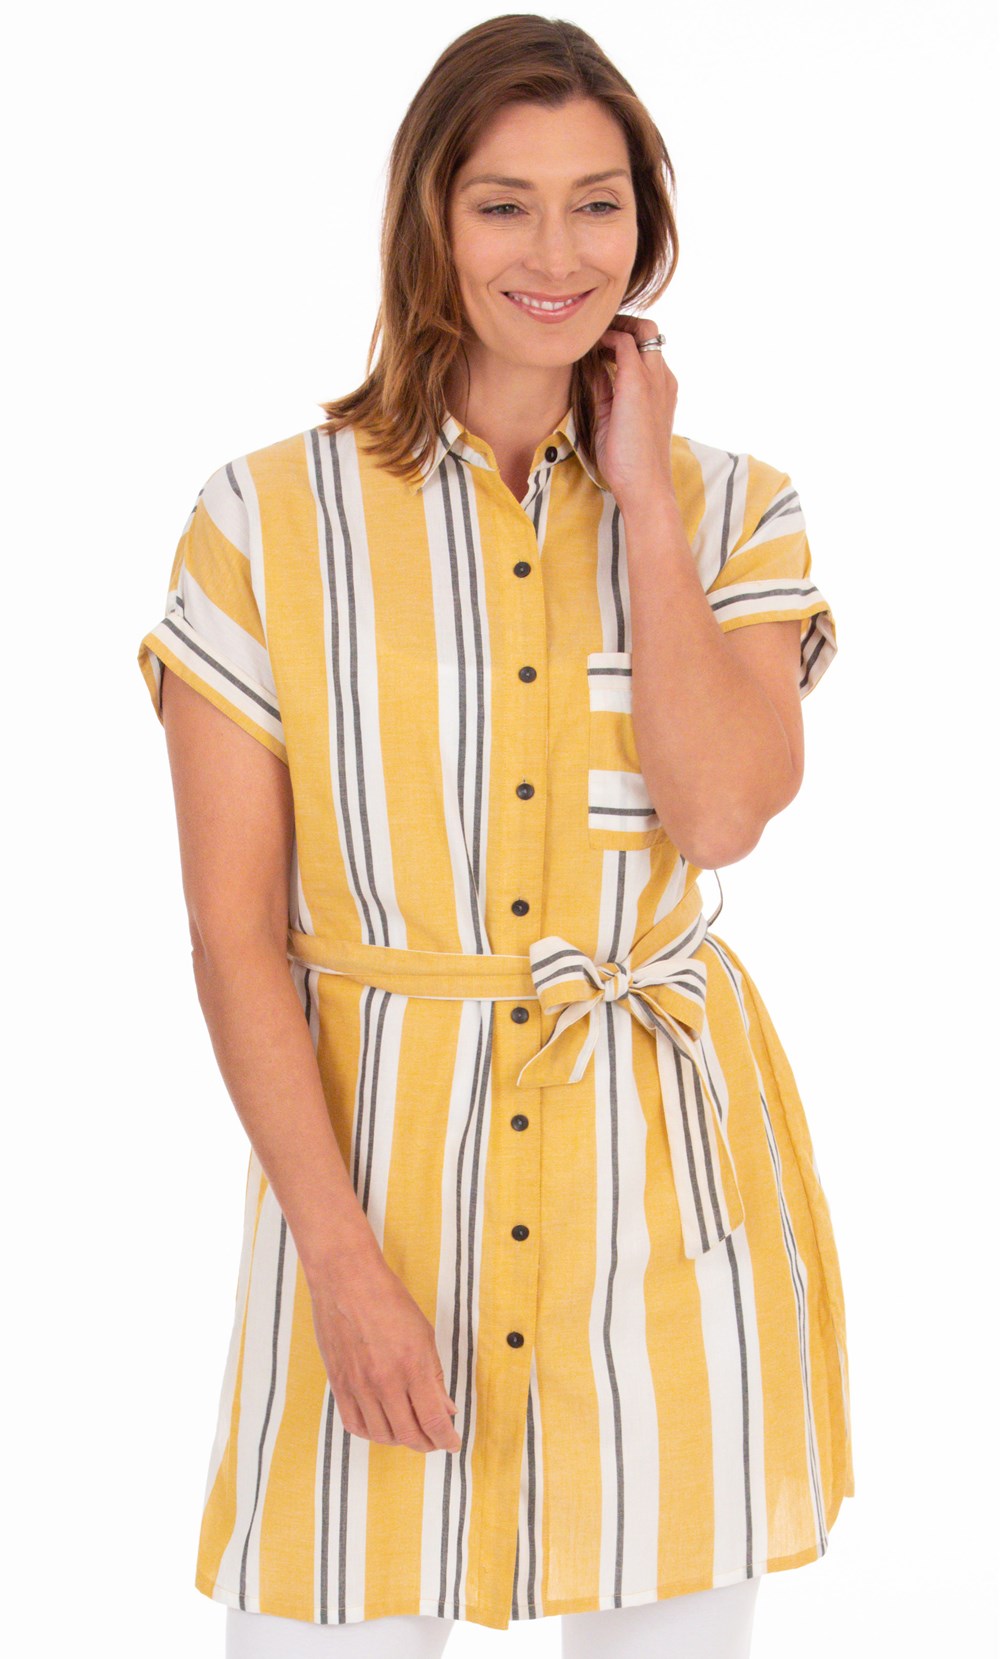 Striped Cotton Shirt Dress